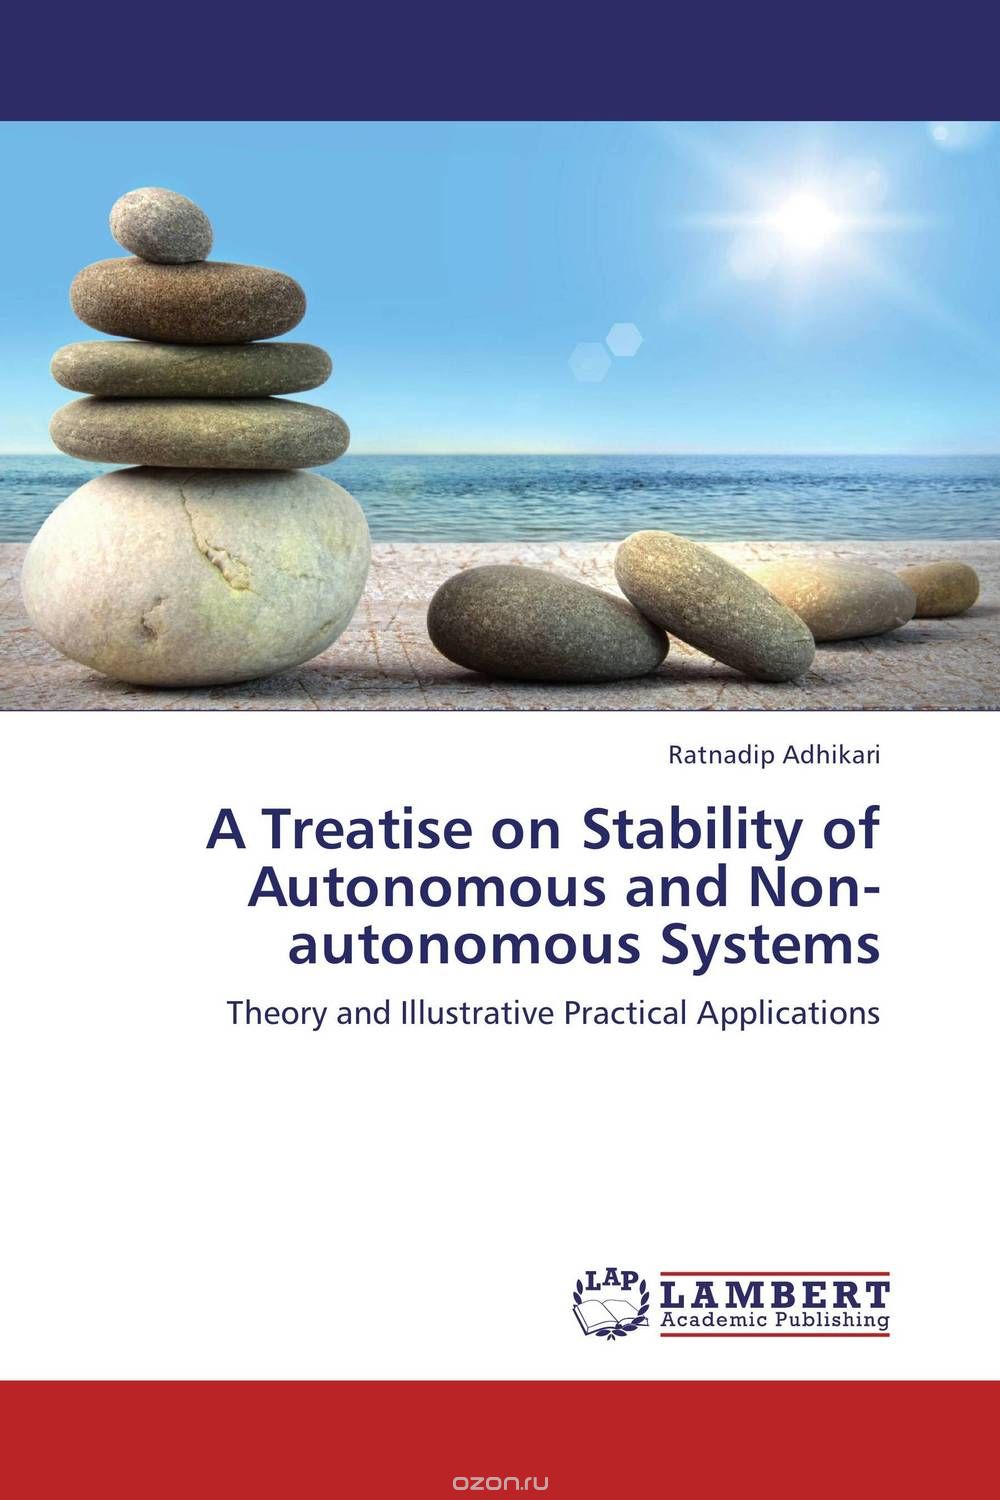 Скачать книгу "A Treatise on Stability of Autonomous and Non-autonomous Systems"